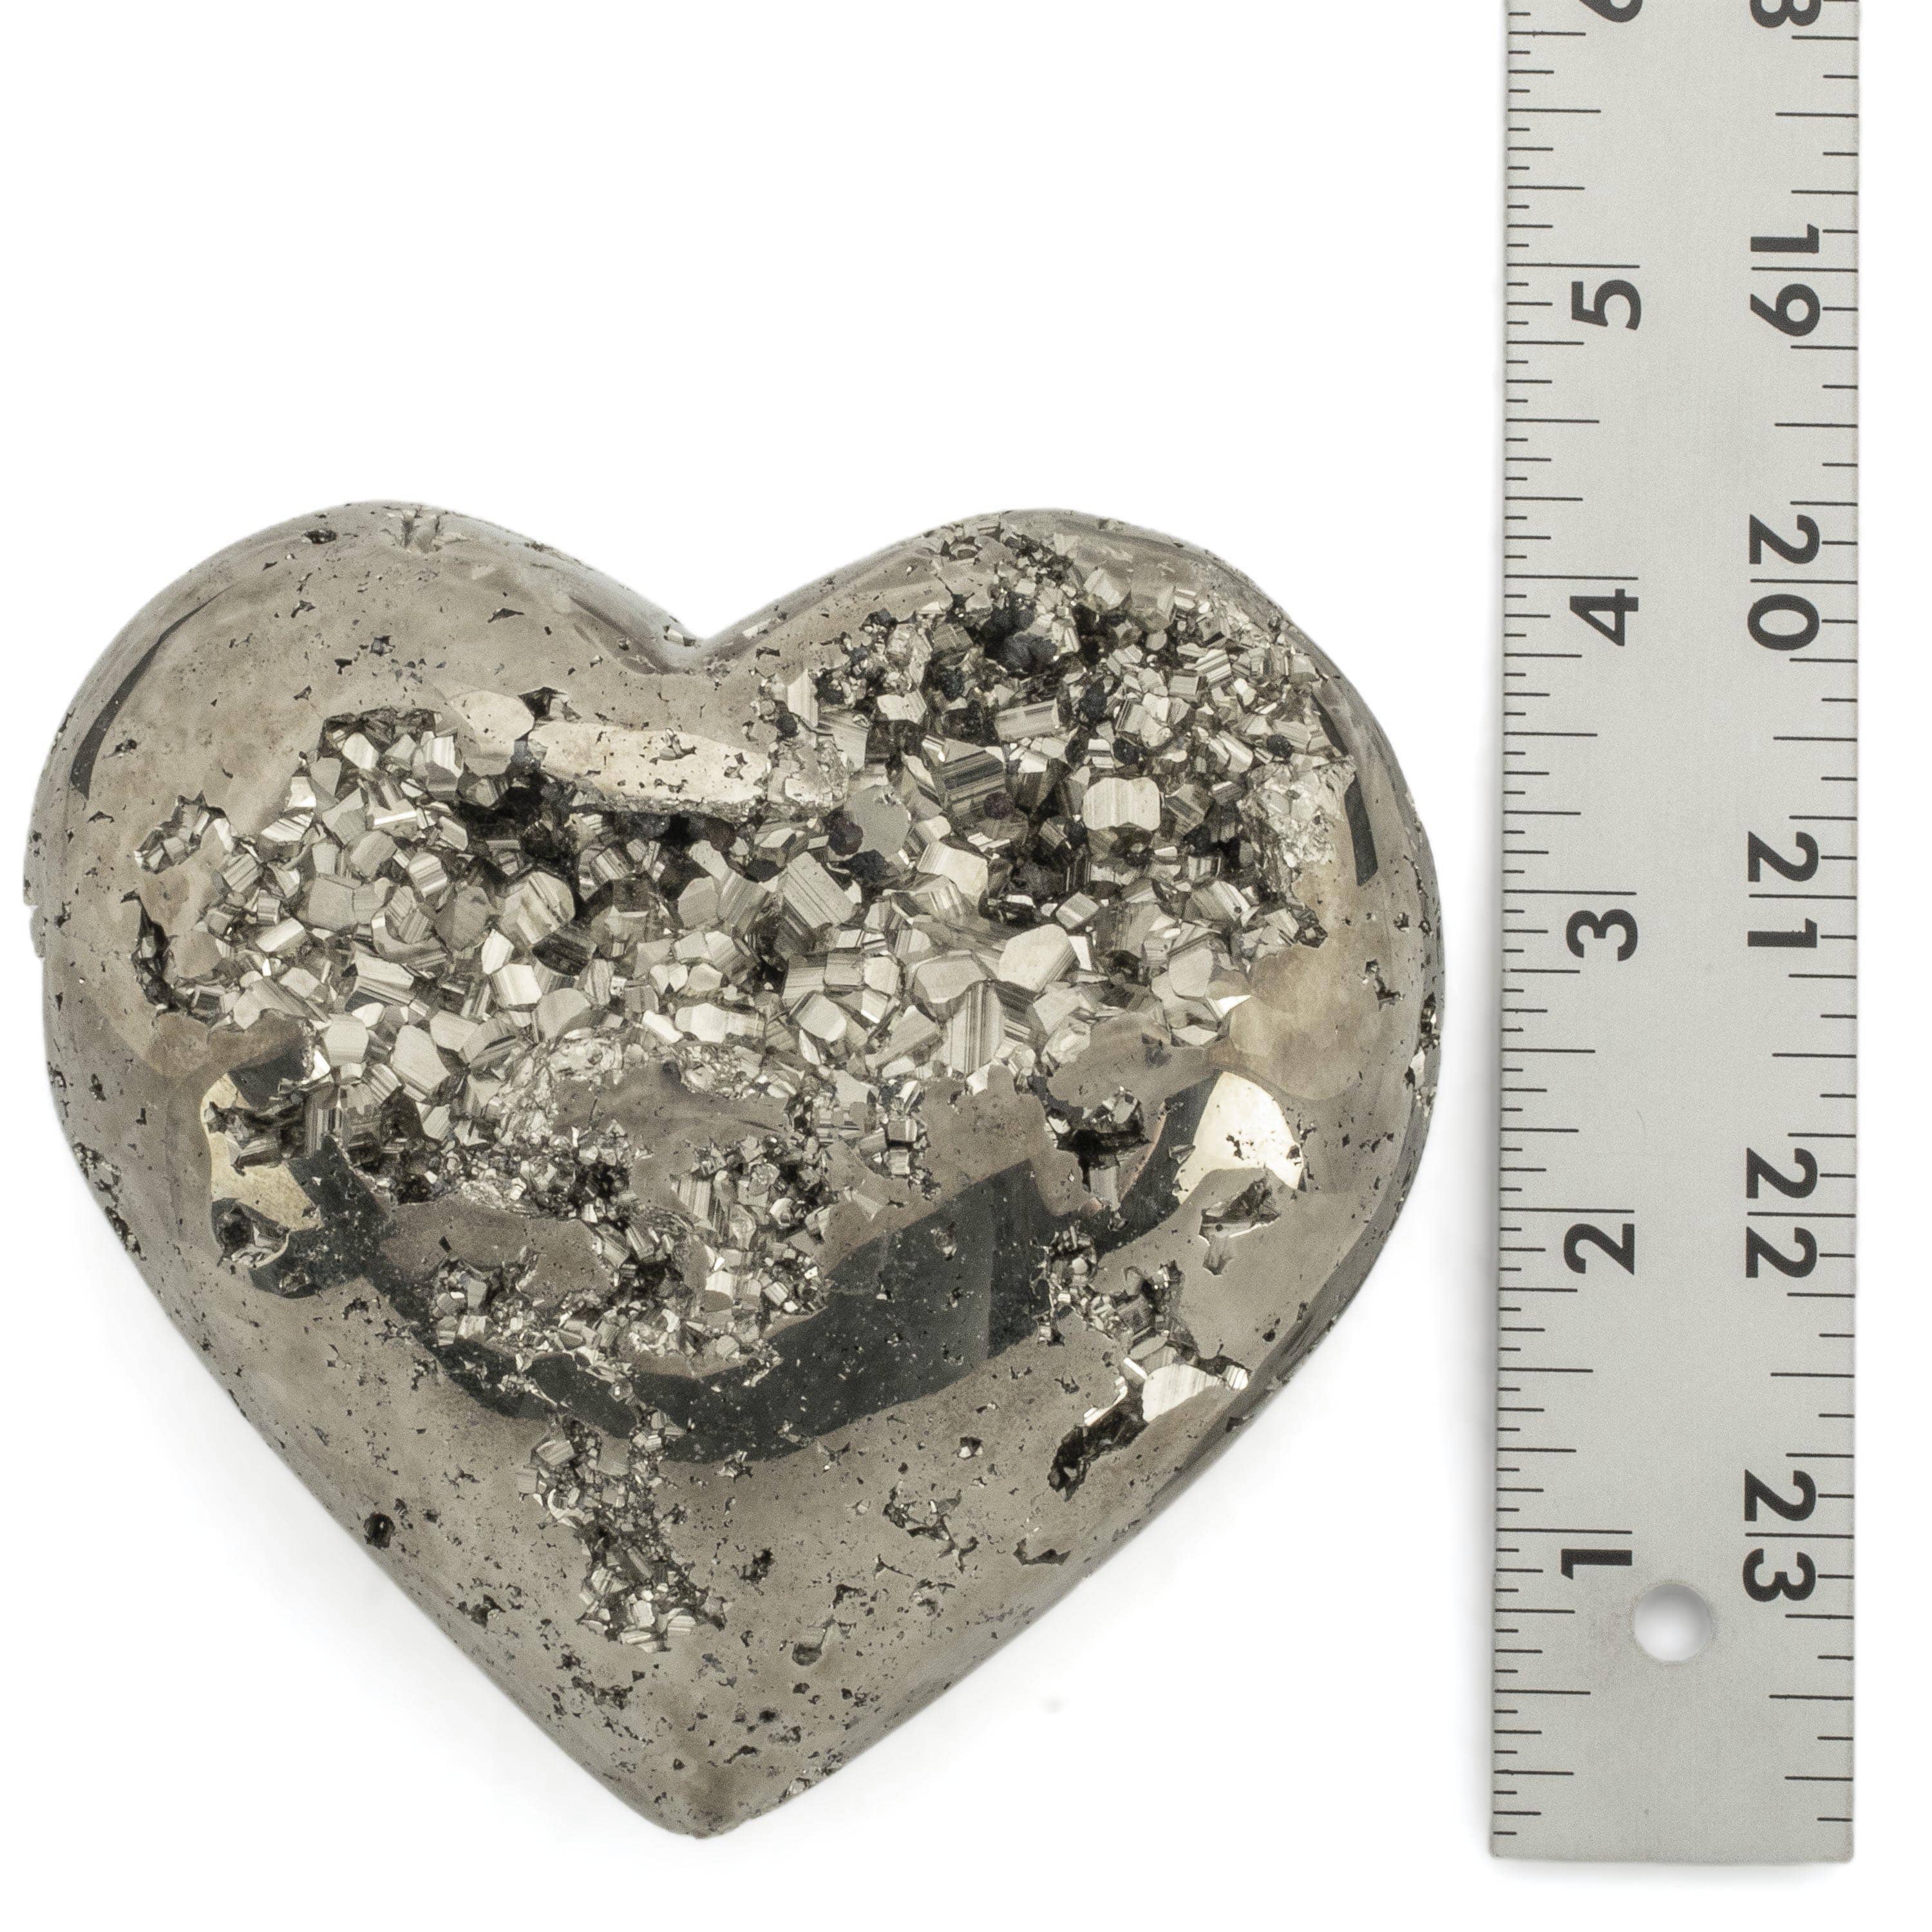 Kalifano Pyrite Pyrite Heart Carving 4.5" / 1,110 grams GH1200-PC.003